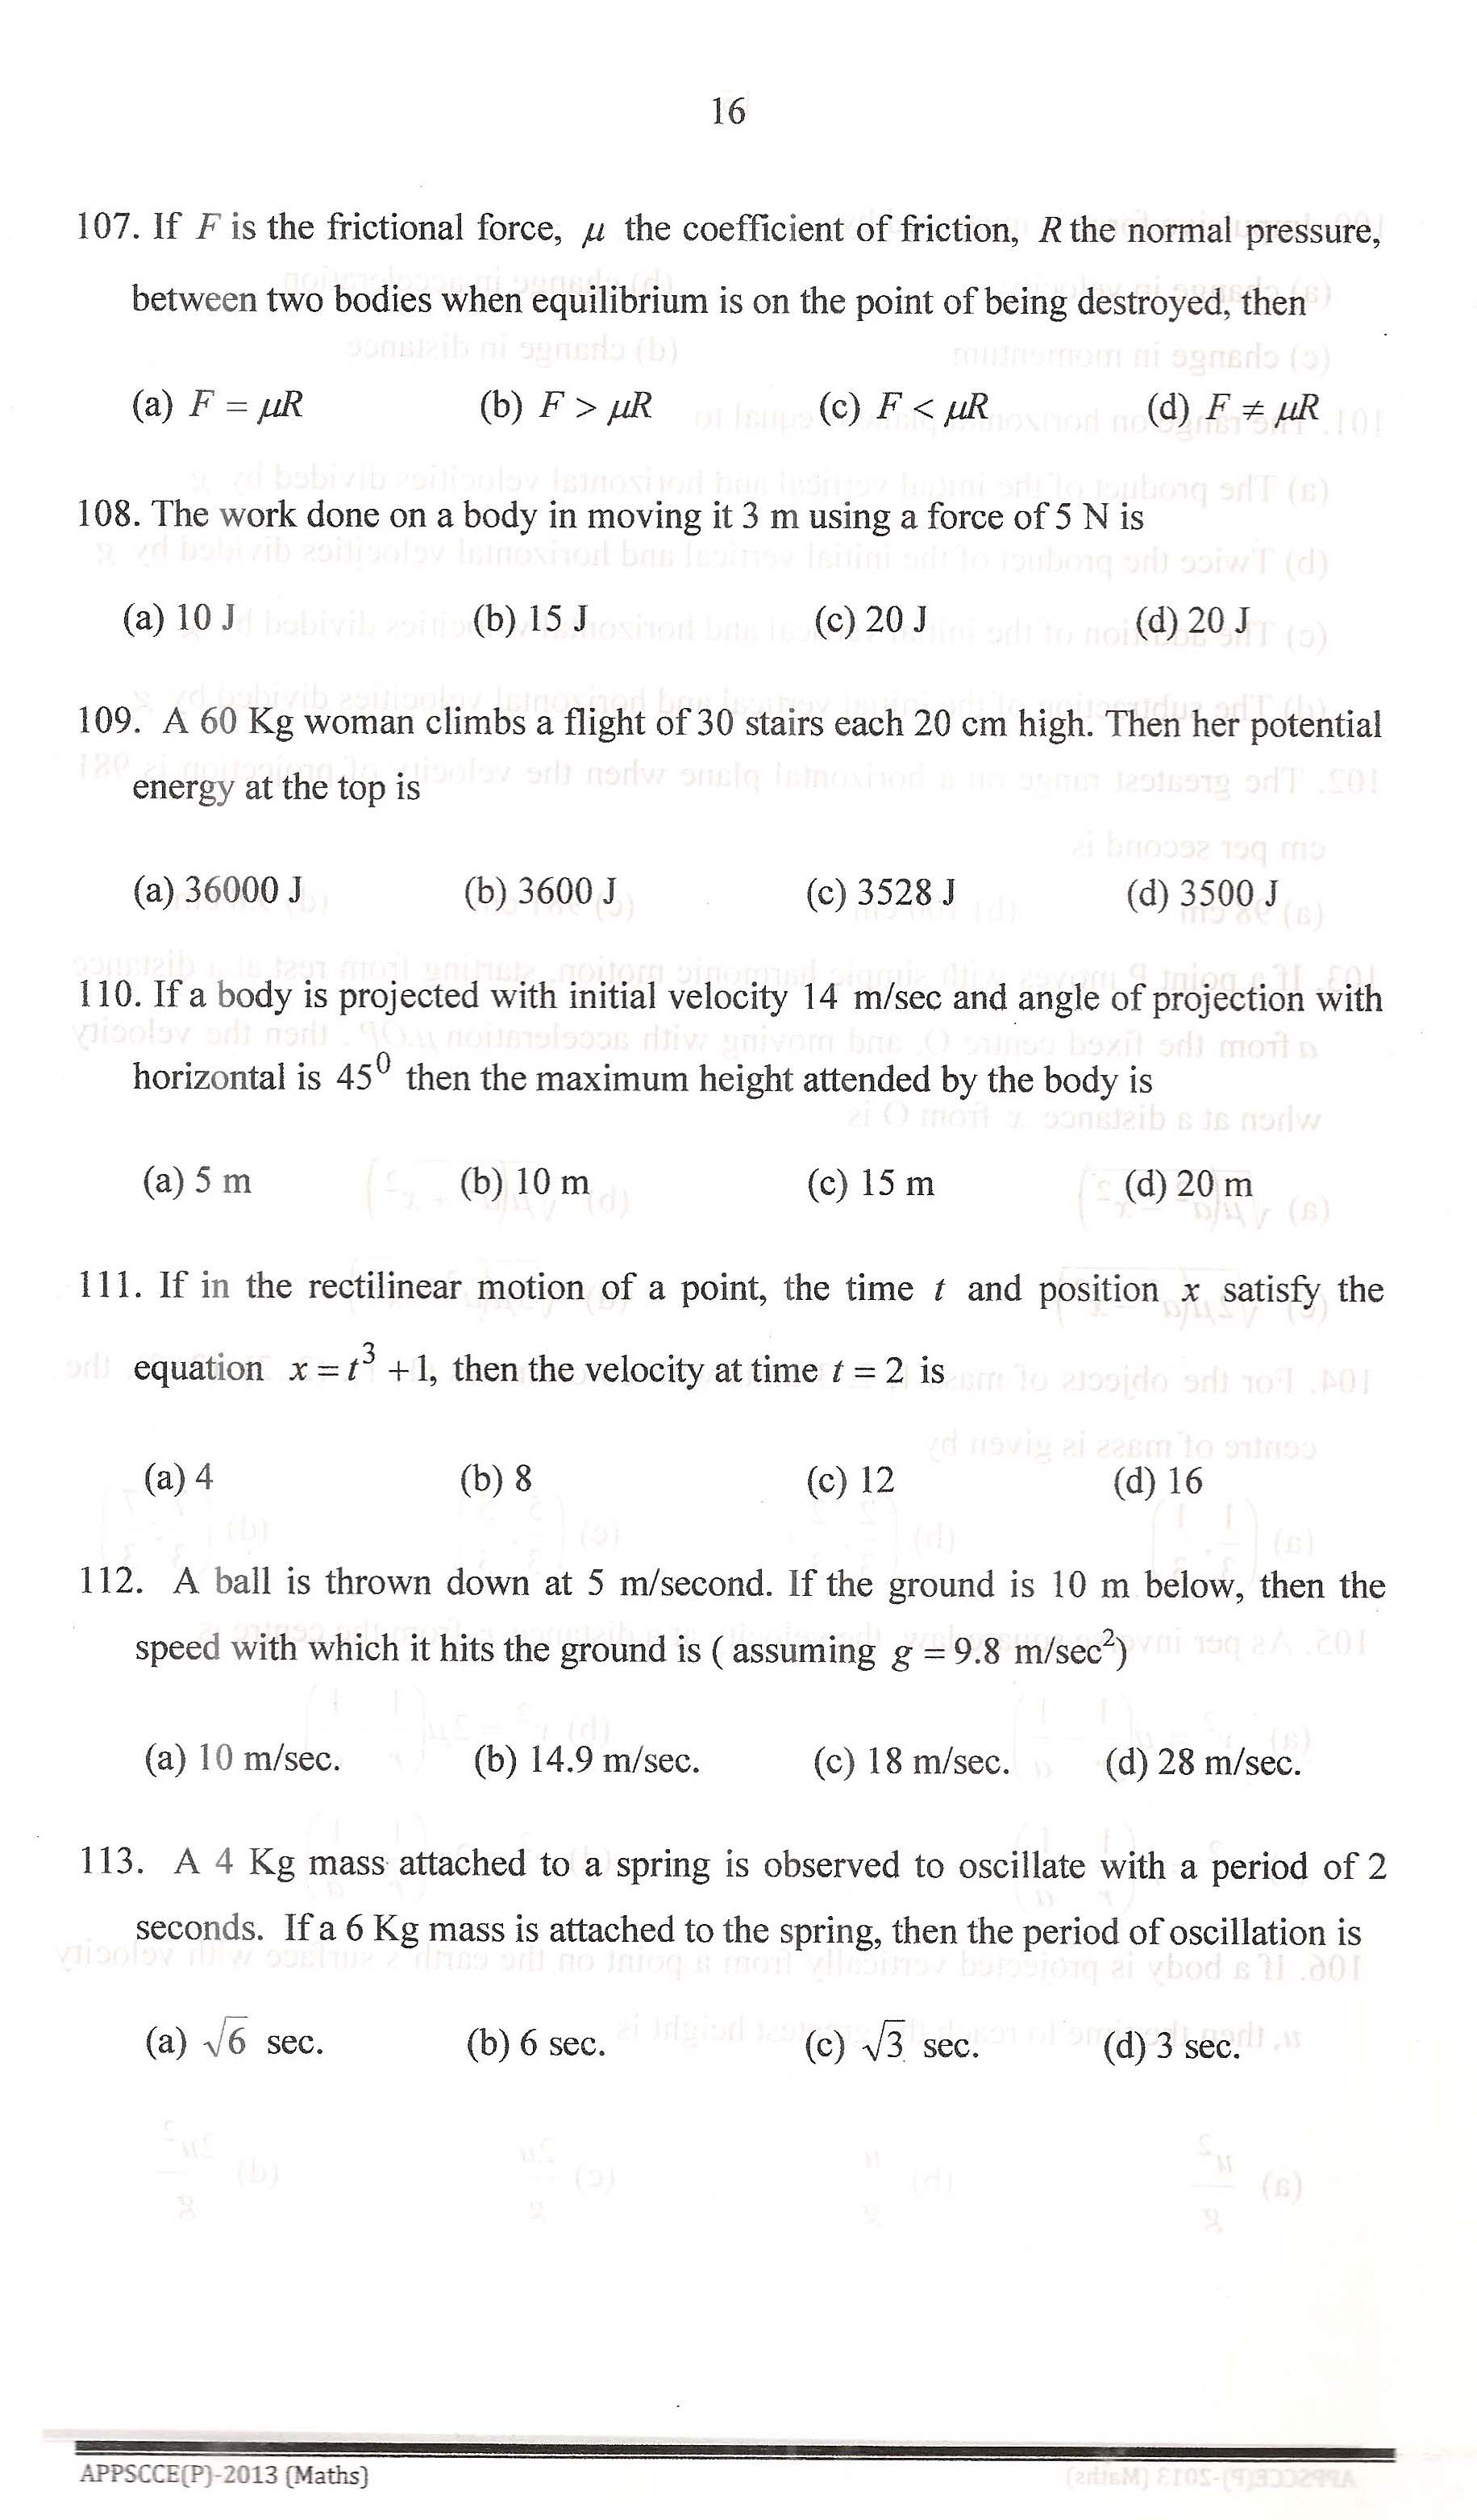 APPSC Combined Competitive Prelims Exam 2013 Mathematics 17